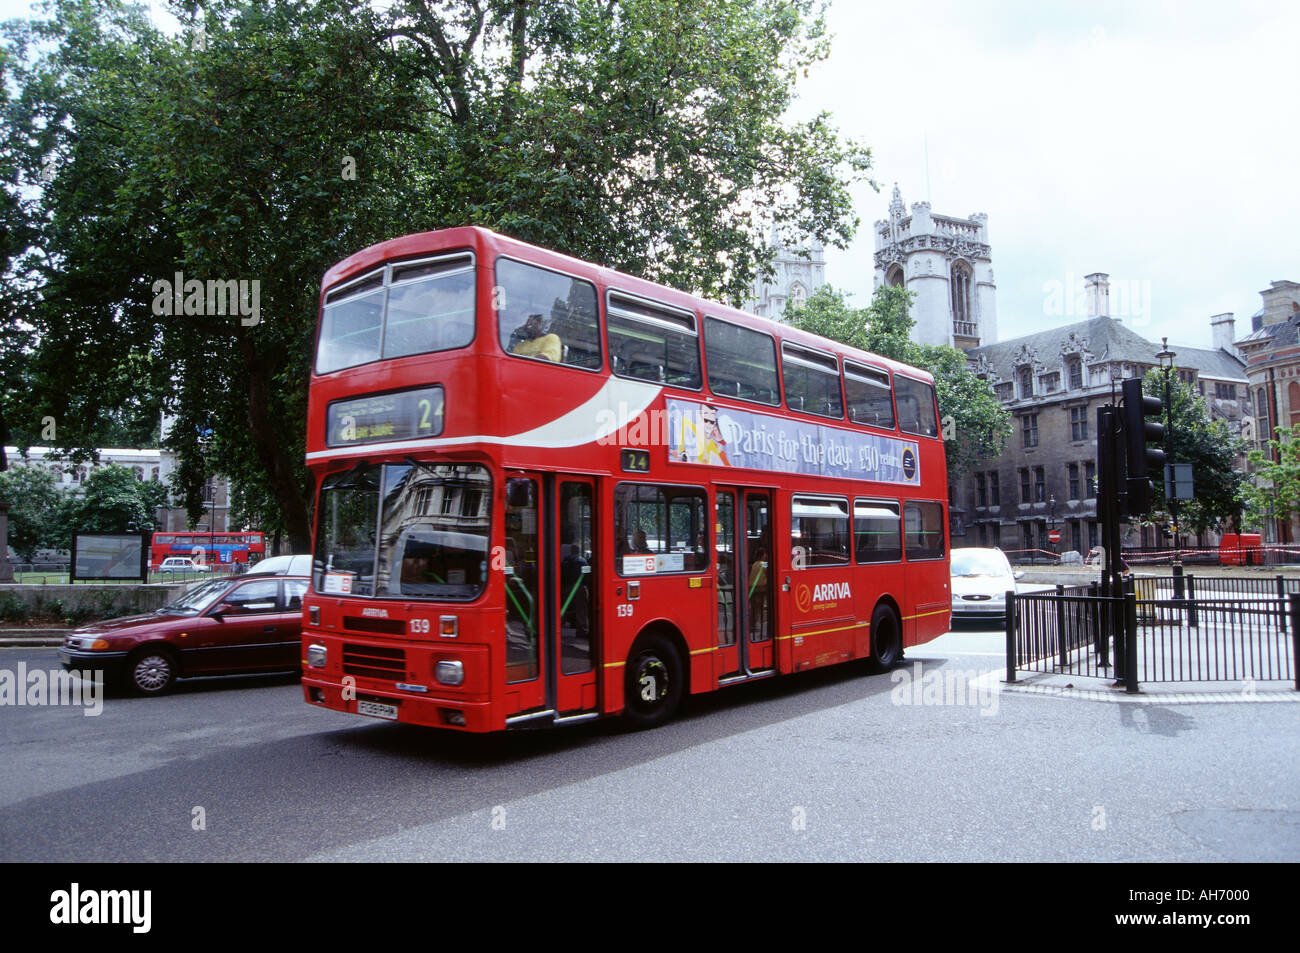 London double decker bus in city Stock Photo